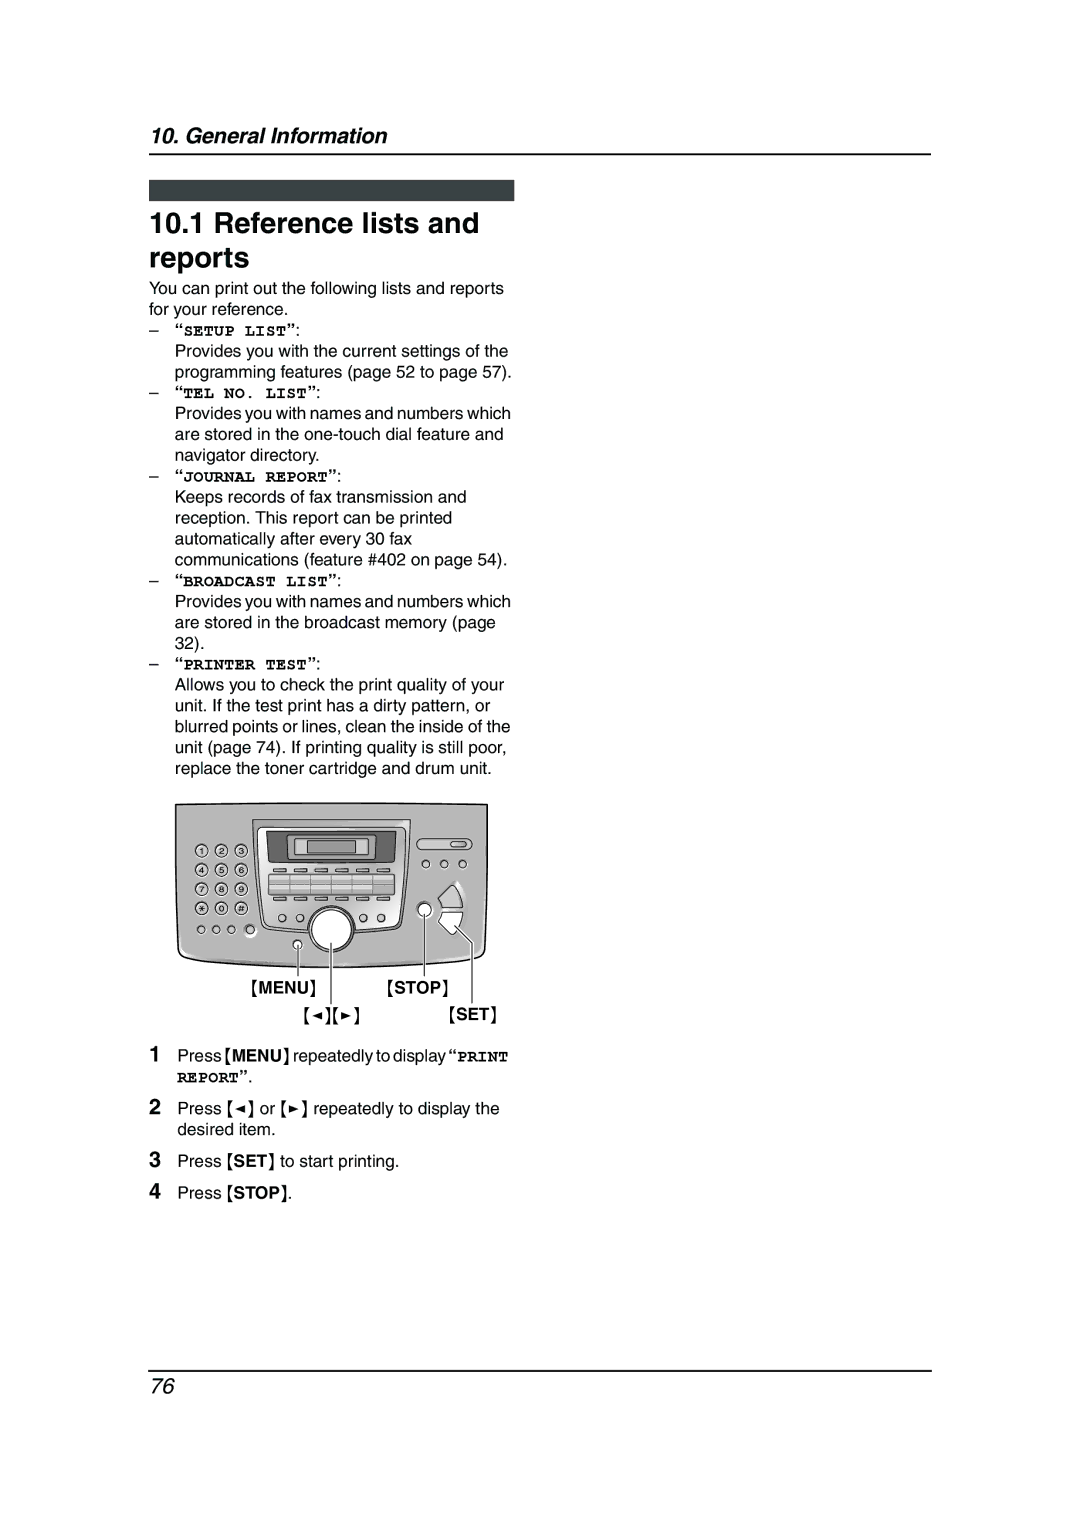 Panasonic KX-FLM653HK manual Reference lists and reports, Menu Stop 